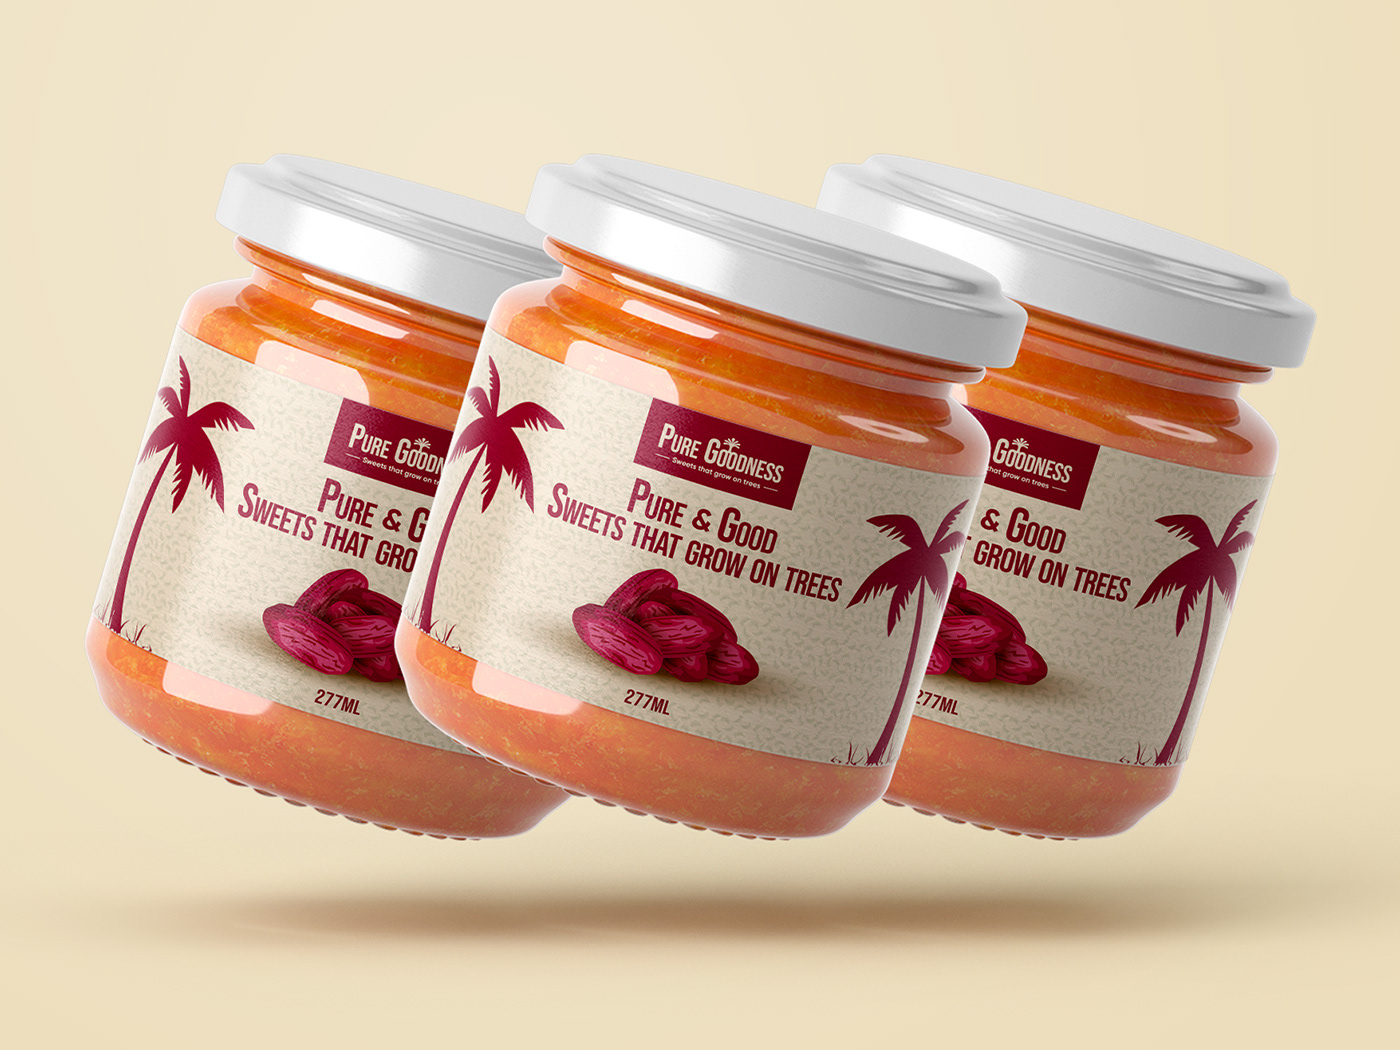 Jam Jar Packaging Design | Label Design | Food Packaging